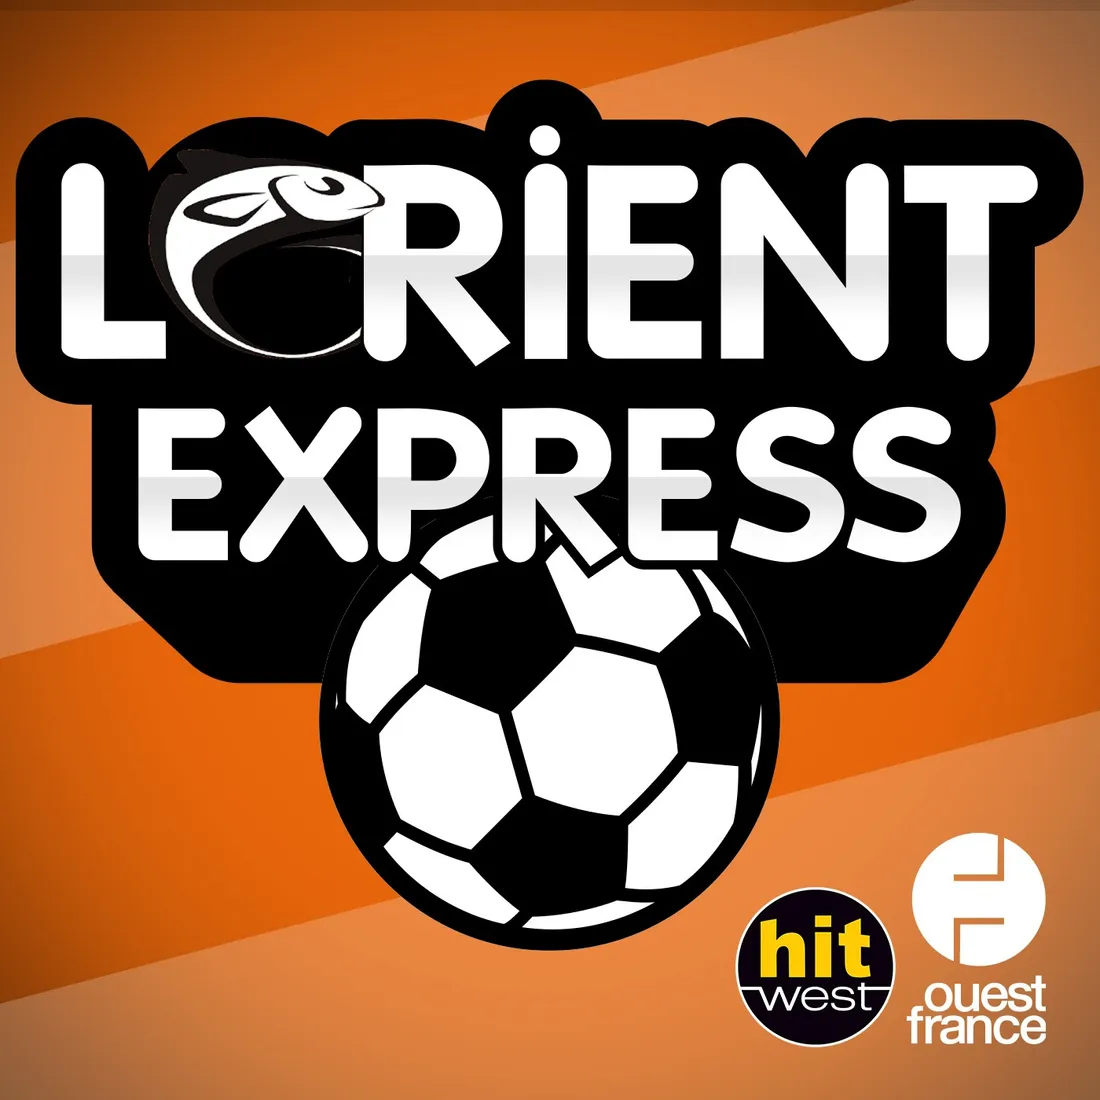 Lorient Express